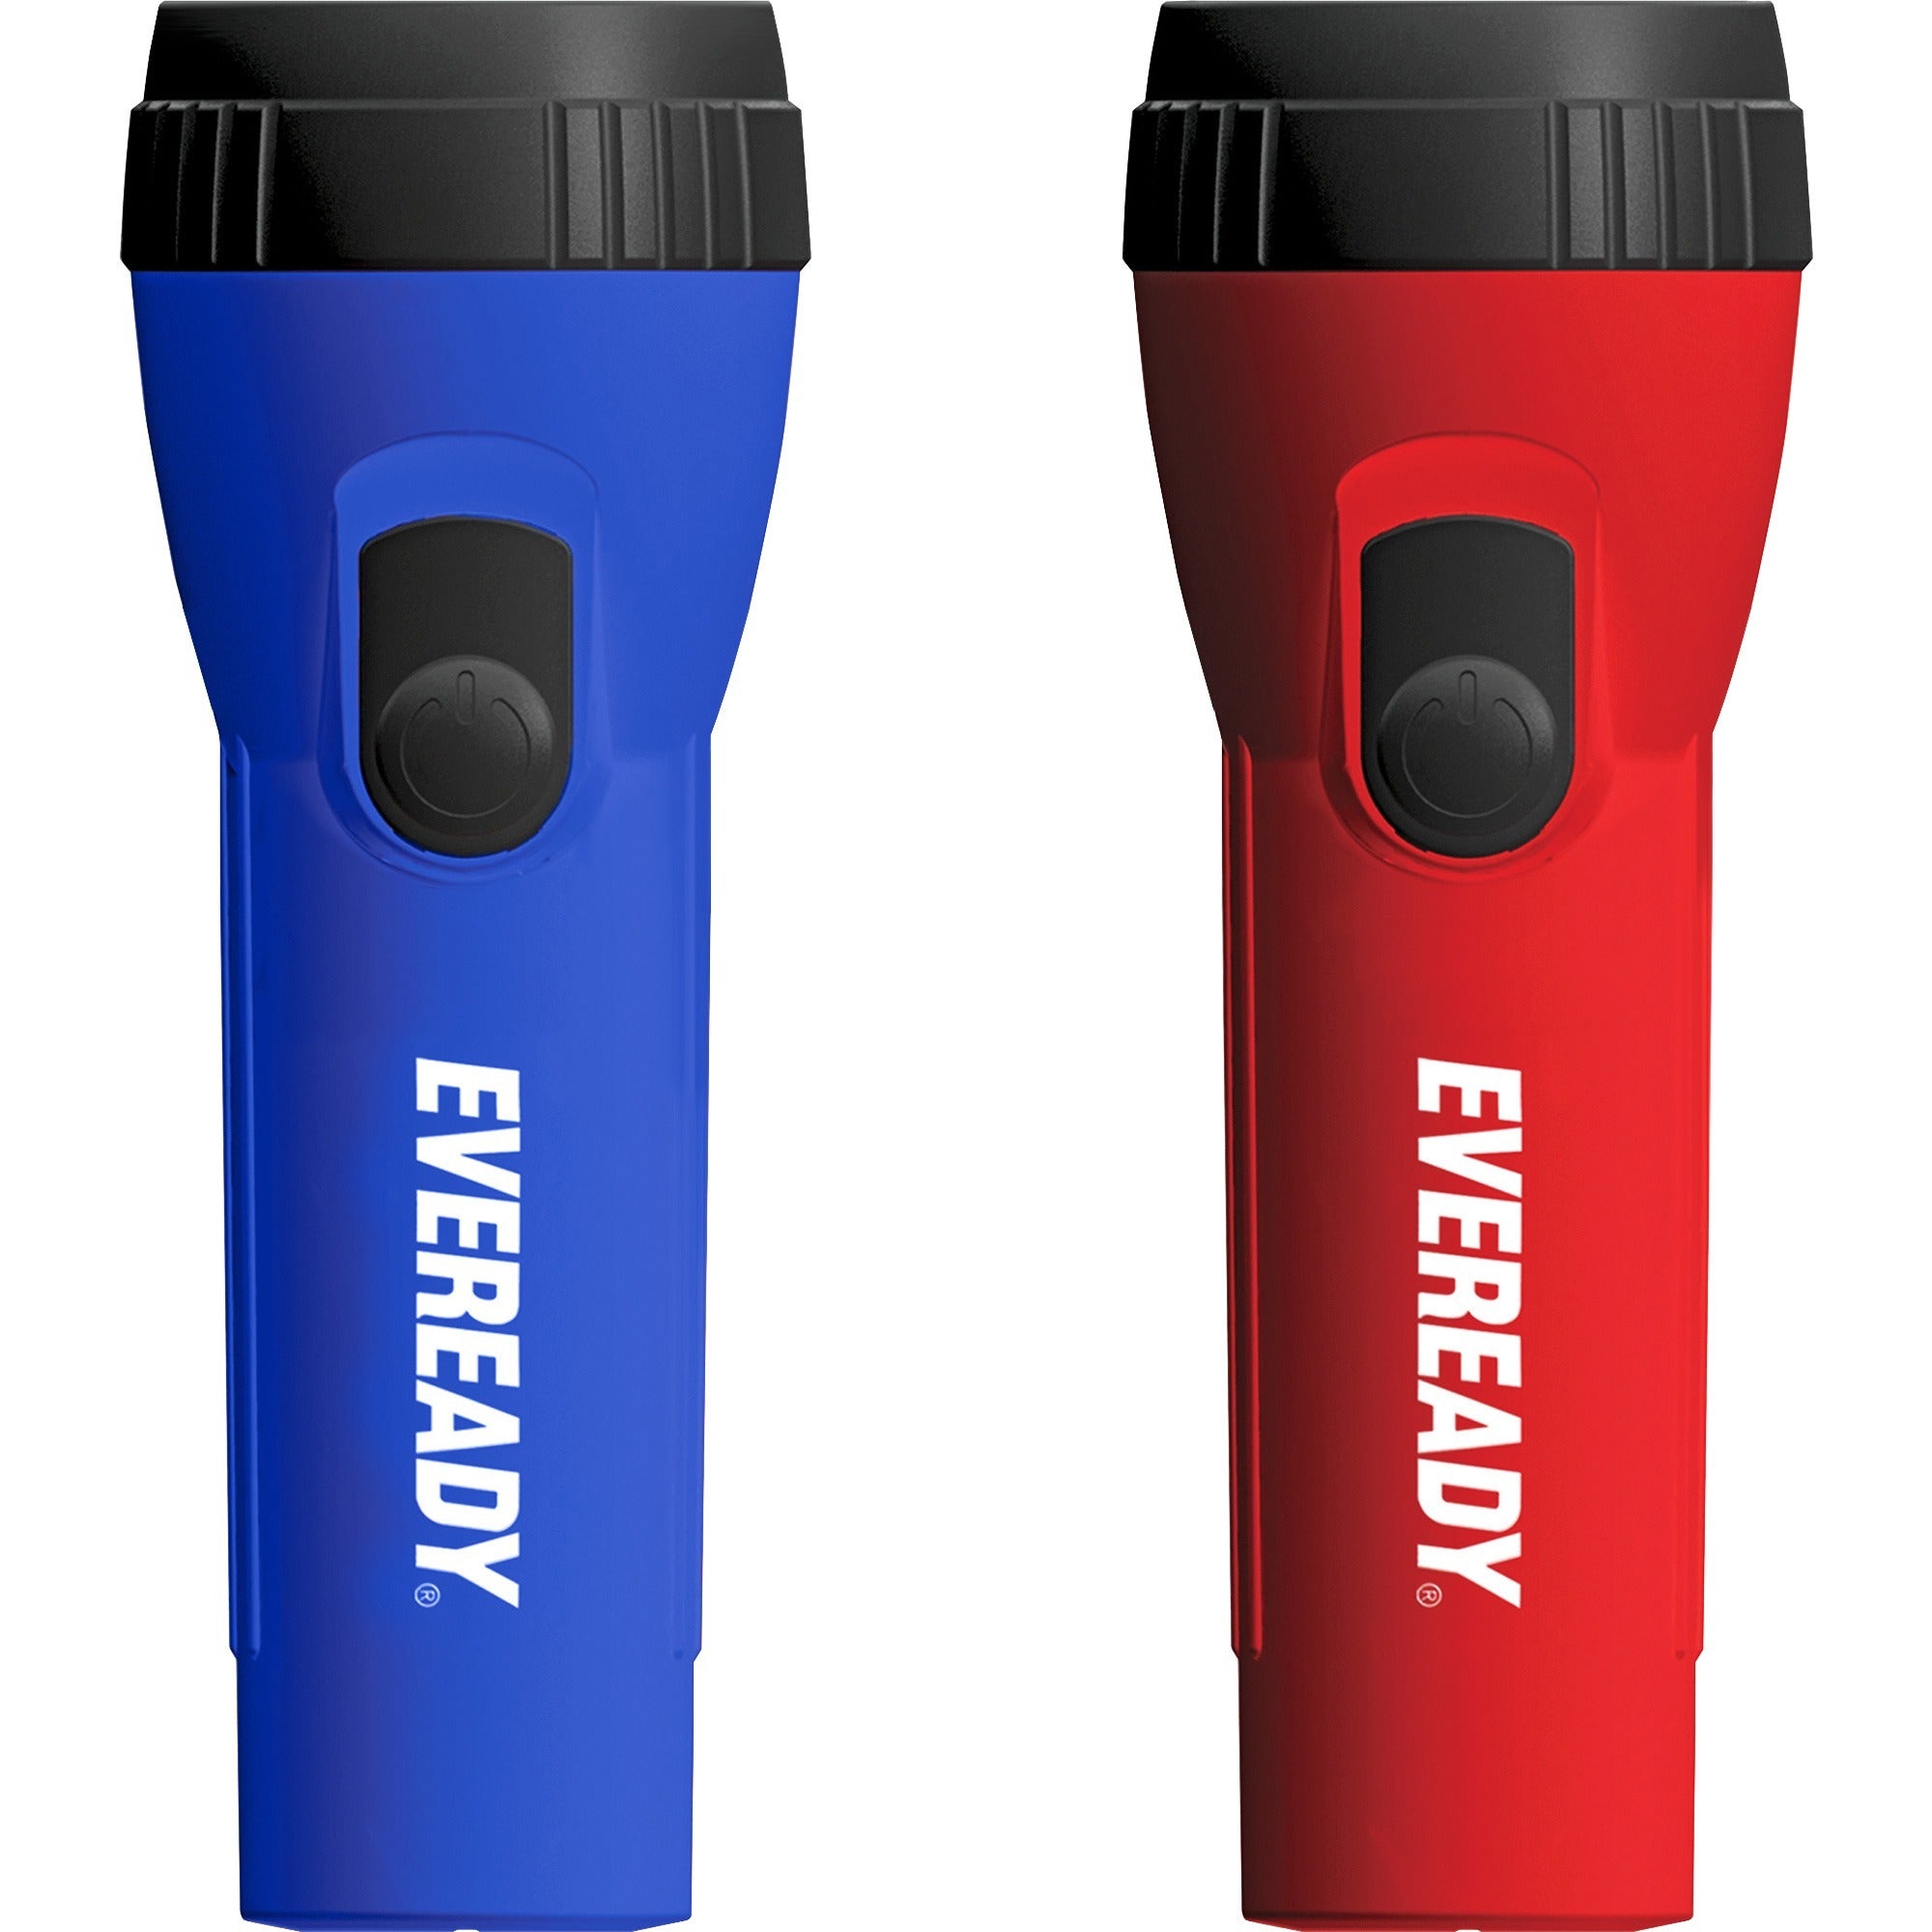 eveready-led-economy-flashlight-led-bright-white-25-lm-lumen-1-x-d-alkaline-battery-polypropylene-assorted_evel15hsct - 1